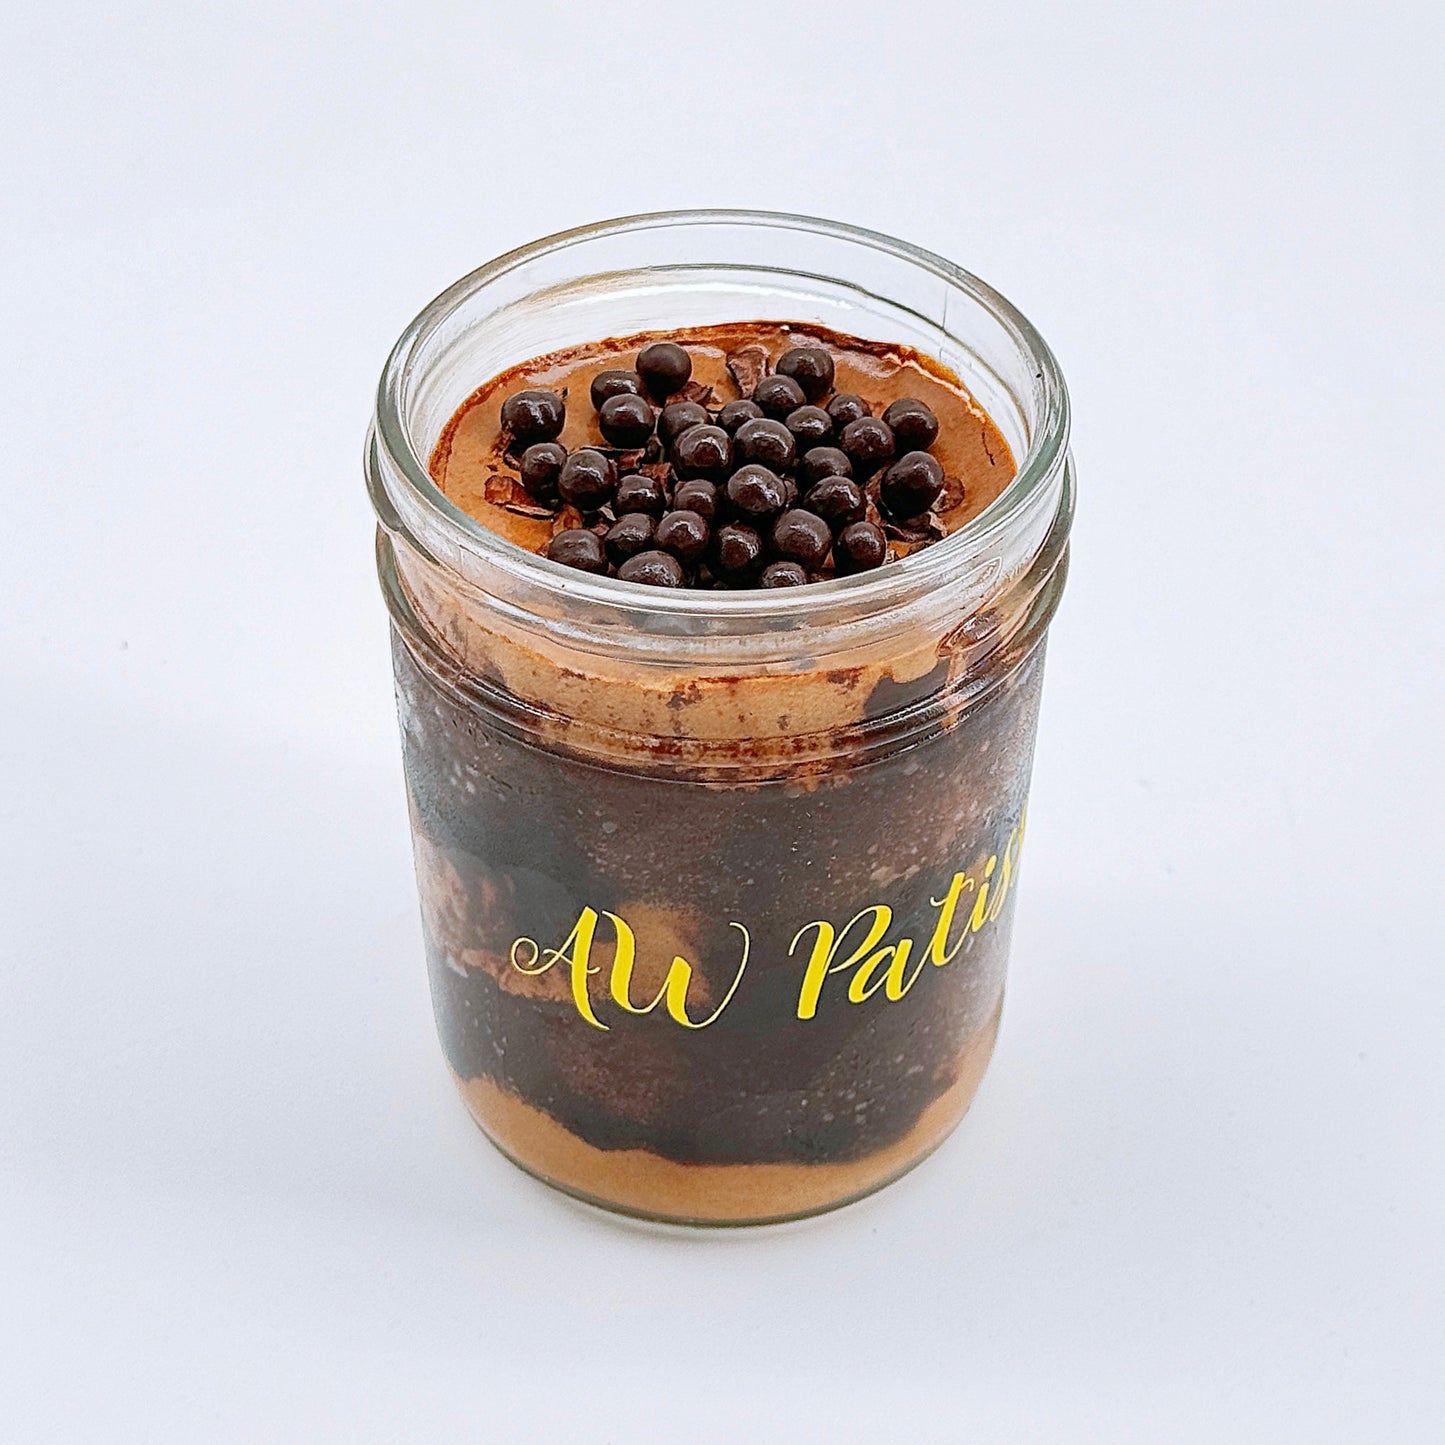 70% 比利時朱古力脆脆蛋糕樽 70% Belgium Dark Chocolate Feuilletine Cake Jar